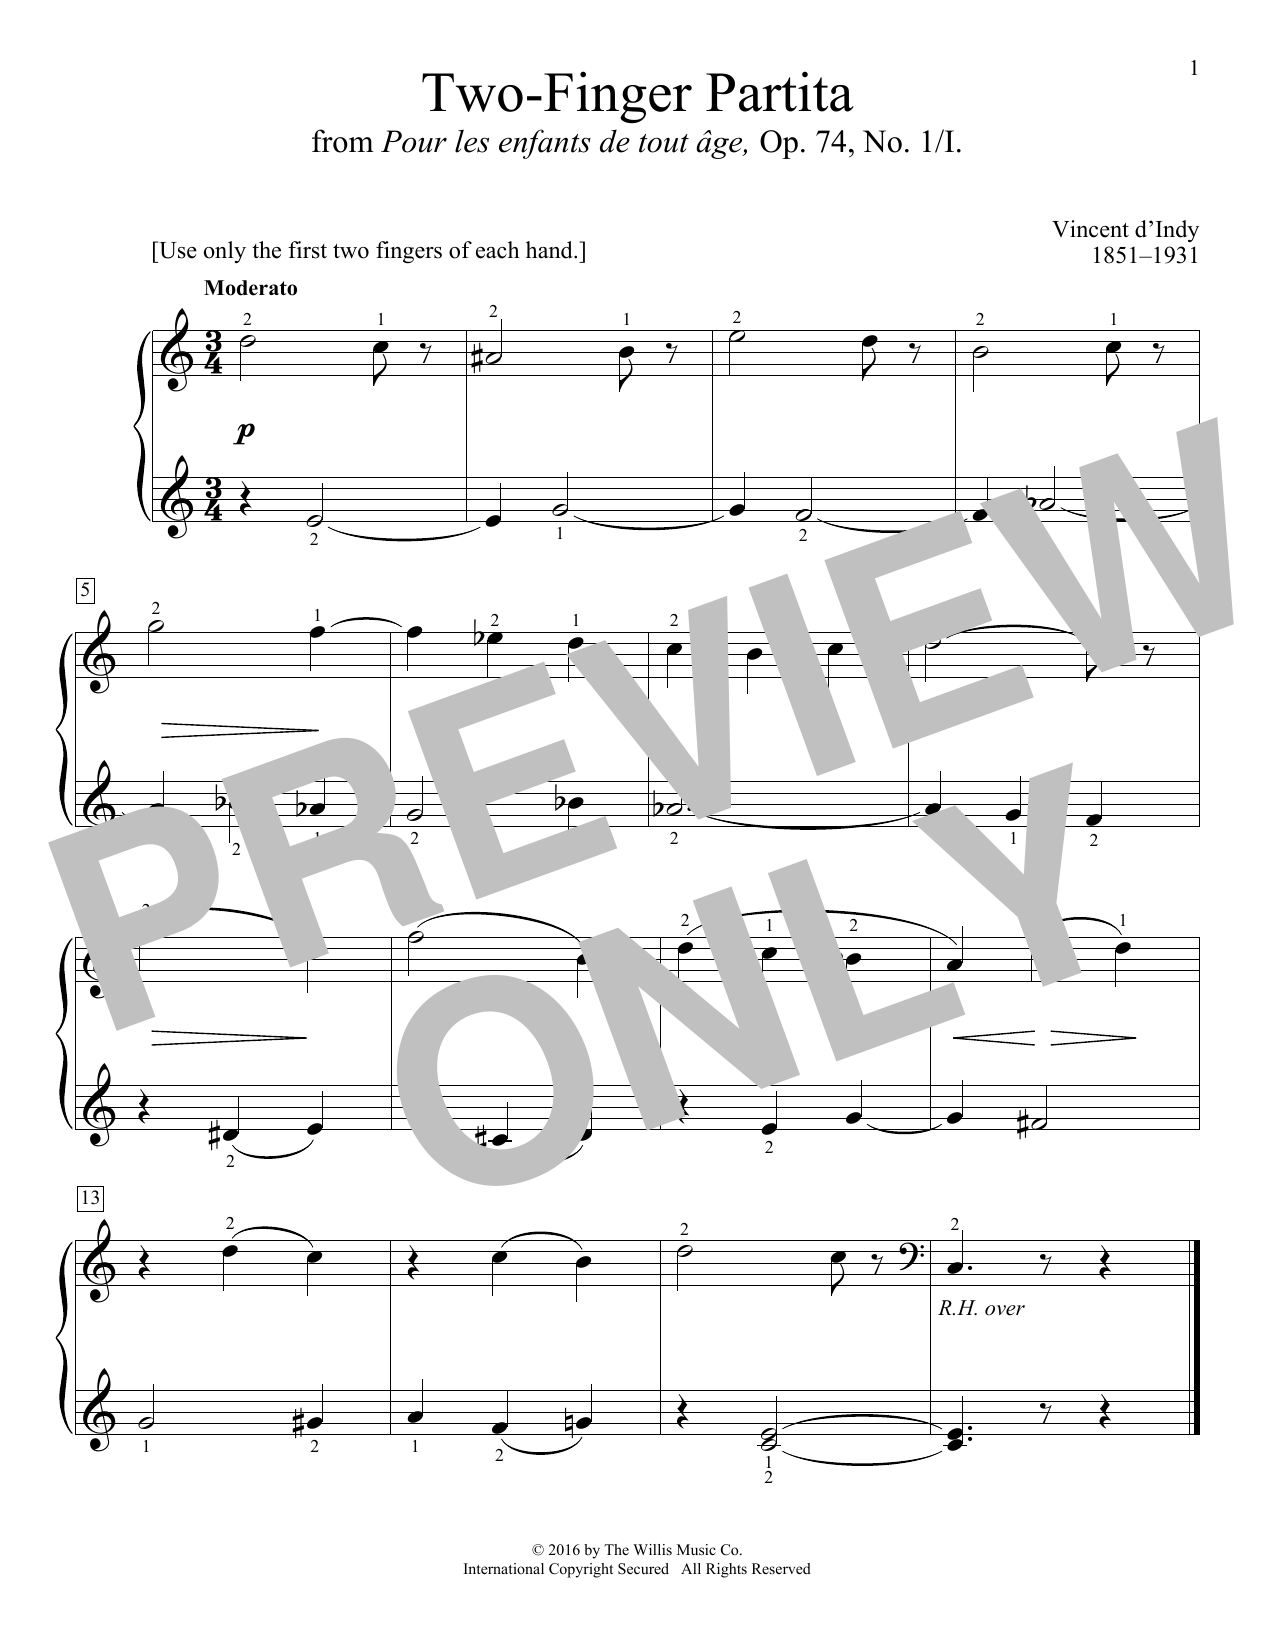 Download Vincent d'Indy Two-Finger Partita Sheet Music